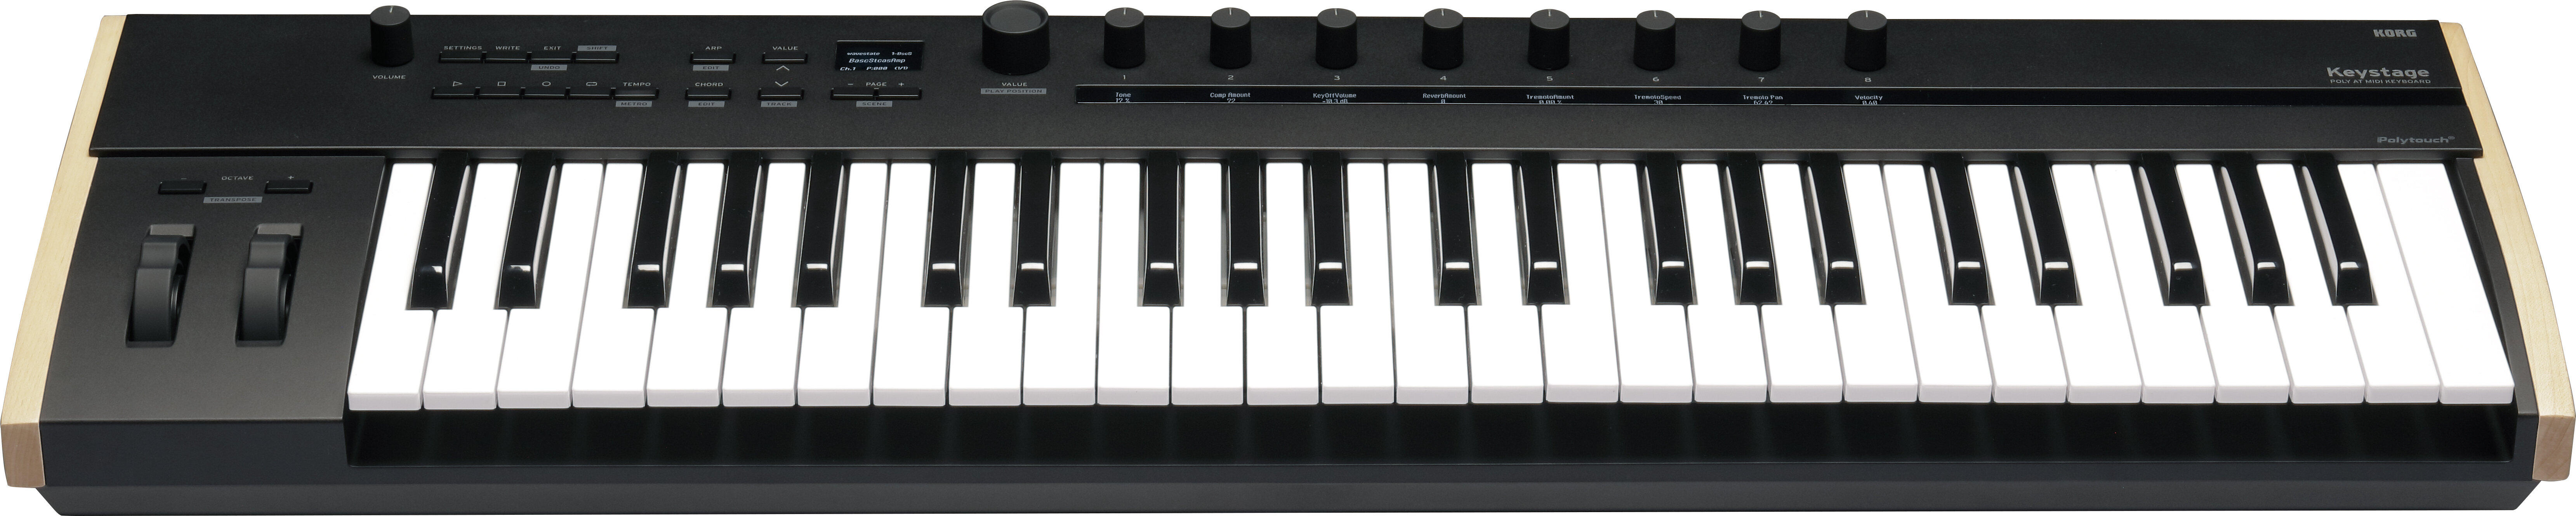 Korg Keystage 49 49 Key Keyboard Controller -  KEYSTAGE49